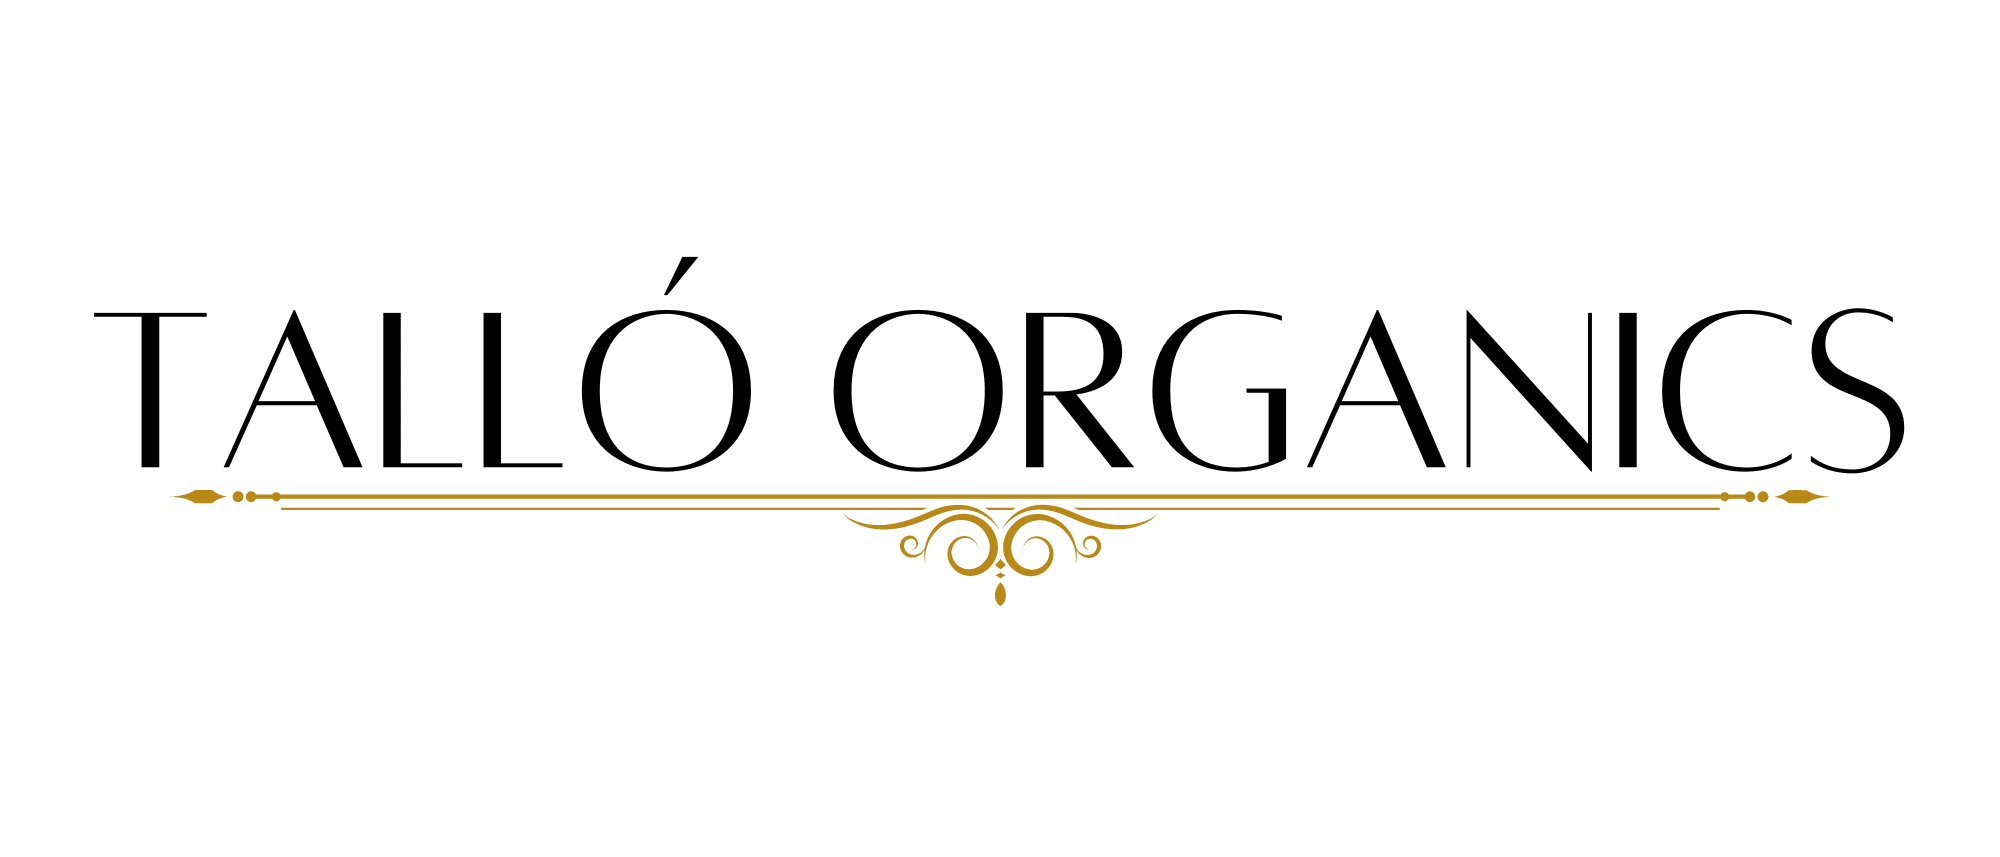 Tallo Organics logo